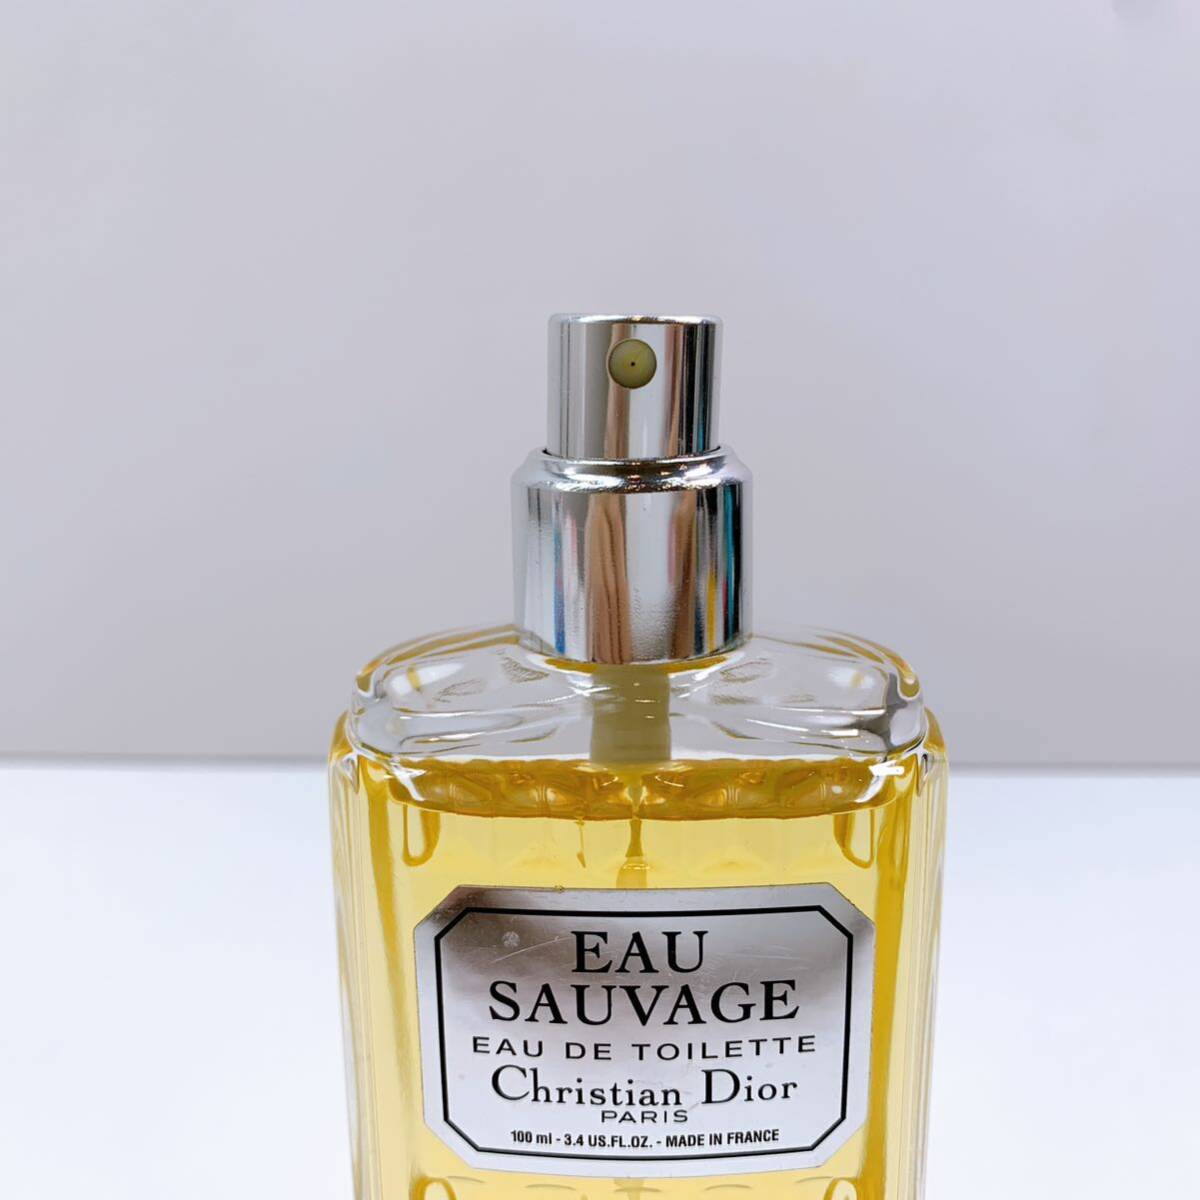 135[ б/у ]Christian Dior EAU SAUVAGE Christian * Dior o-*so балка ju100ml духи аромат o-doto трещина текущее состояние товар 